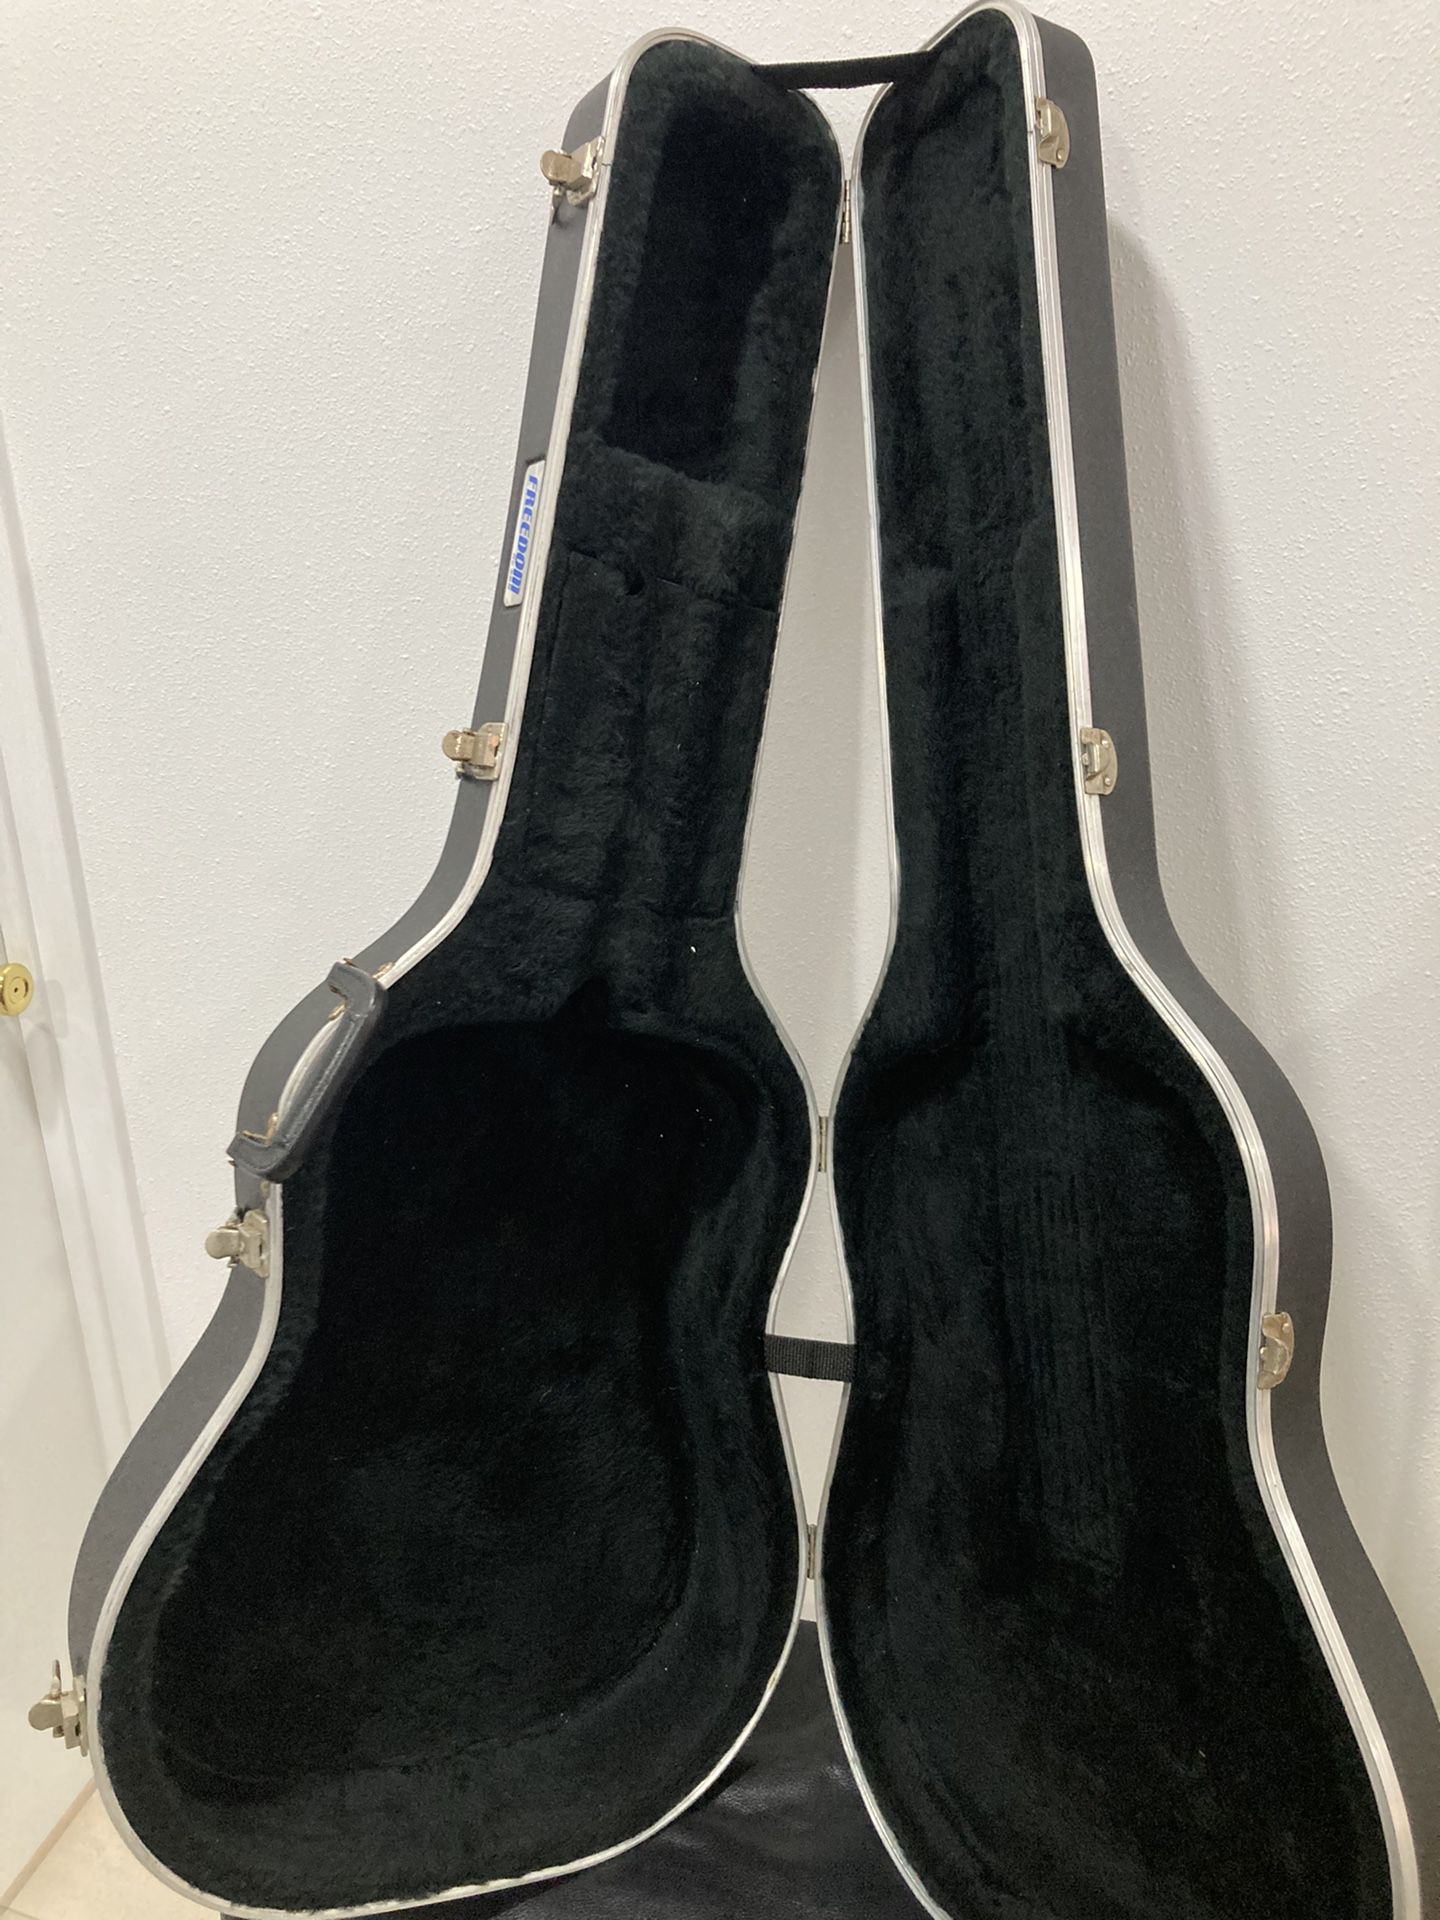 Guitar Hard Case  Excellent Condition $40